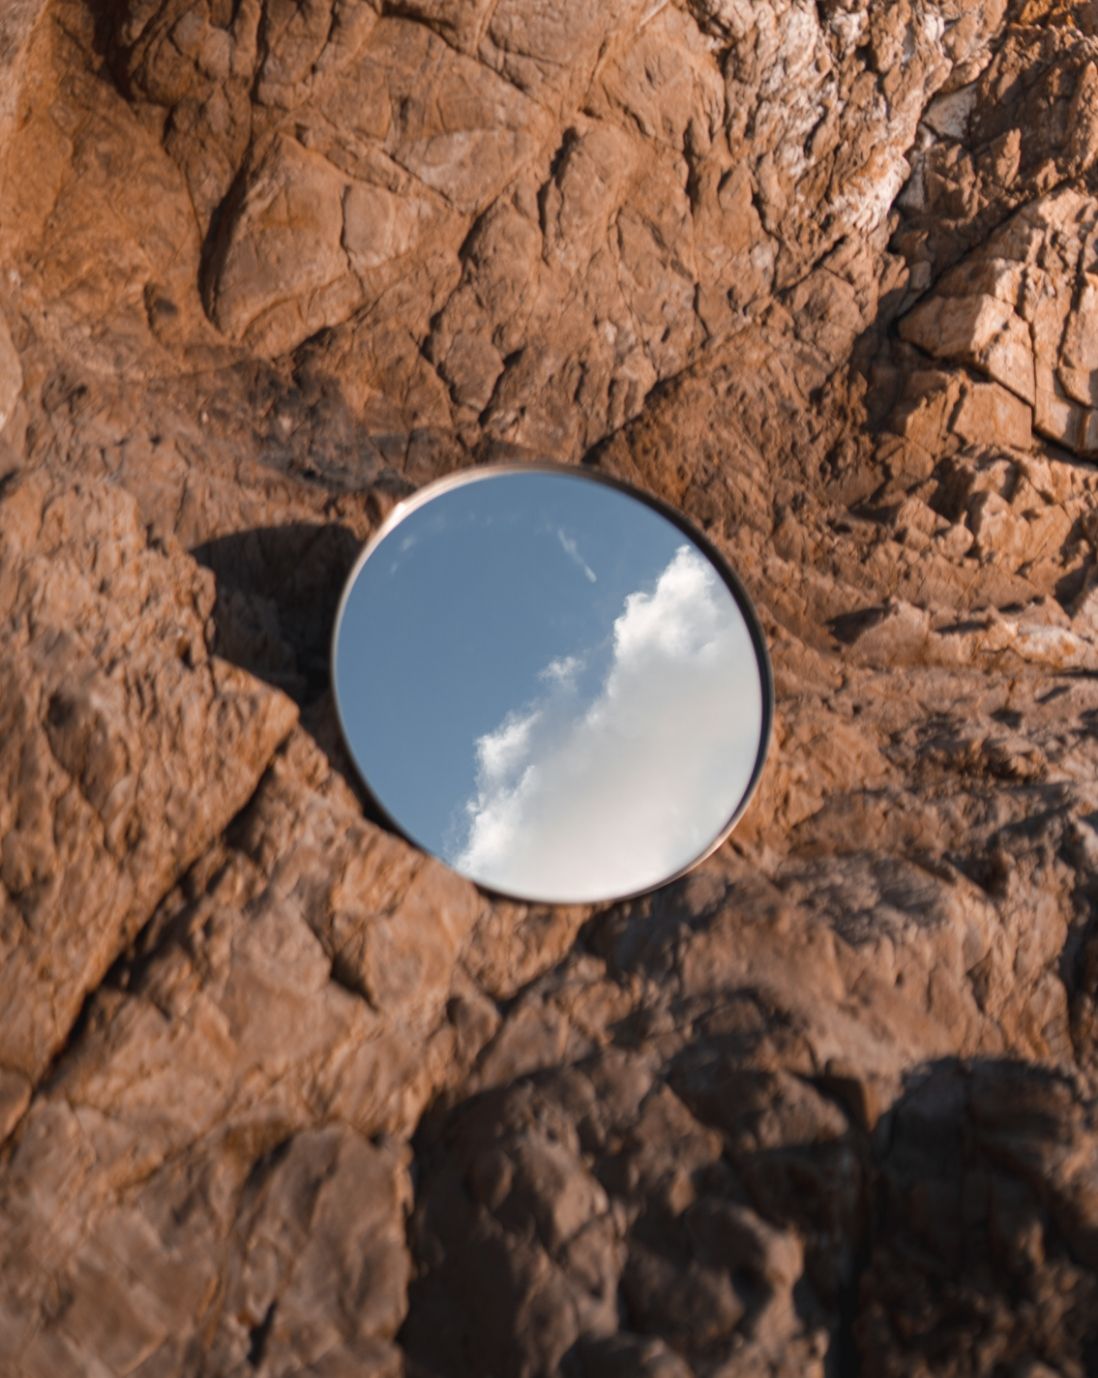 Circle mirror on rocks reflecting the sky